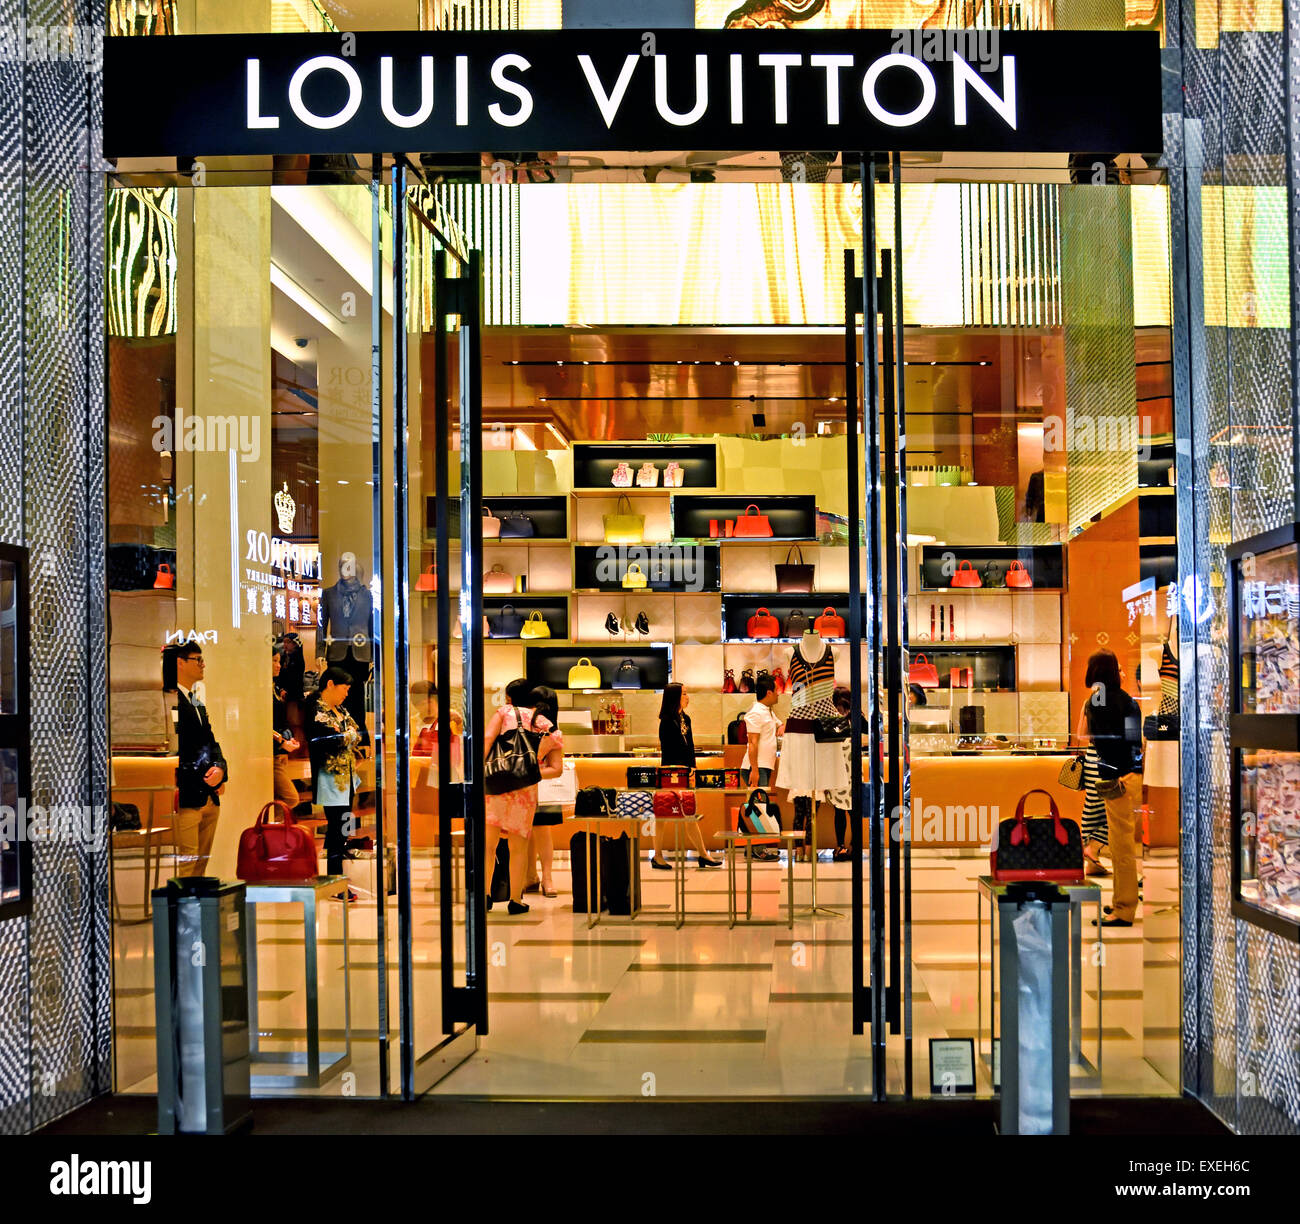 Andragende regiment højde Louis Vuitton Fashion store Kowloon Tsim Sha Tsui Hong Kong China Chinese  Stock Photo - Alamy